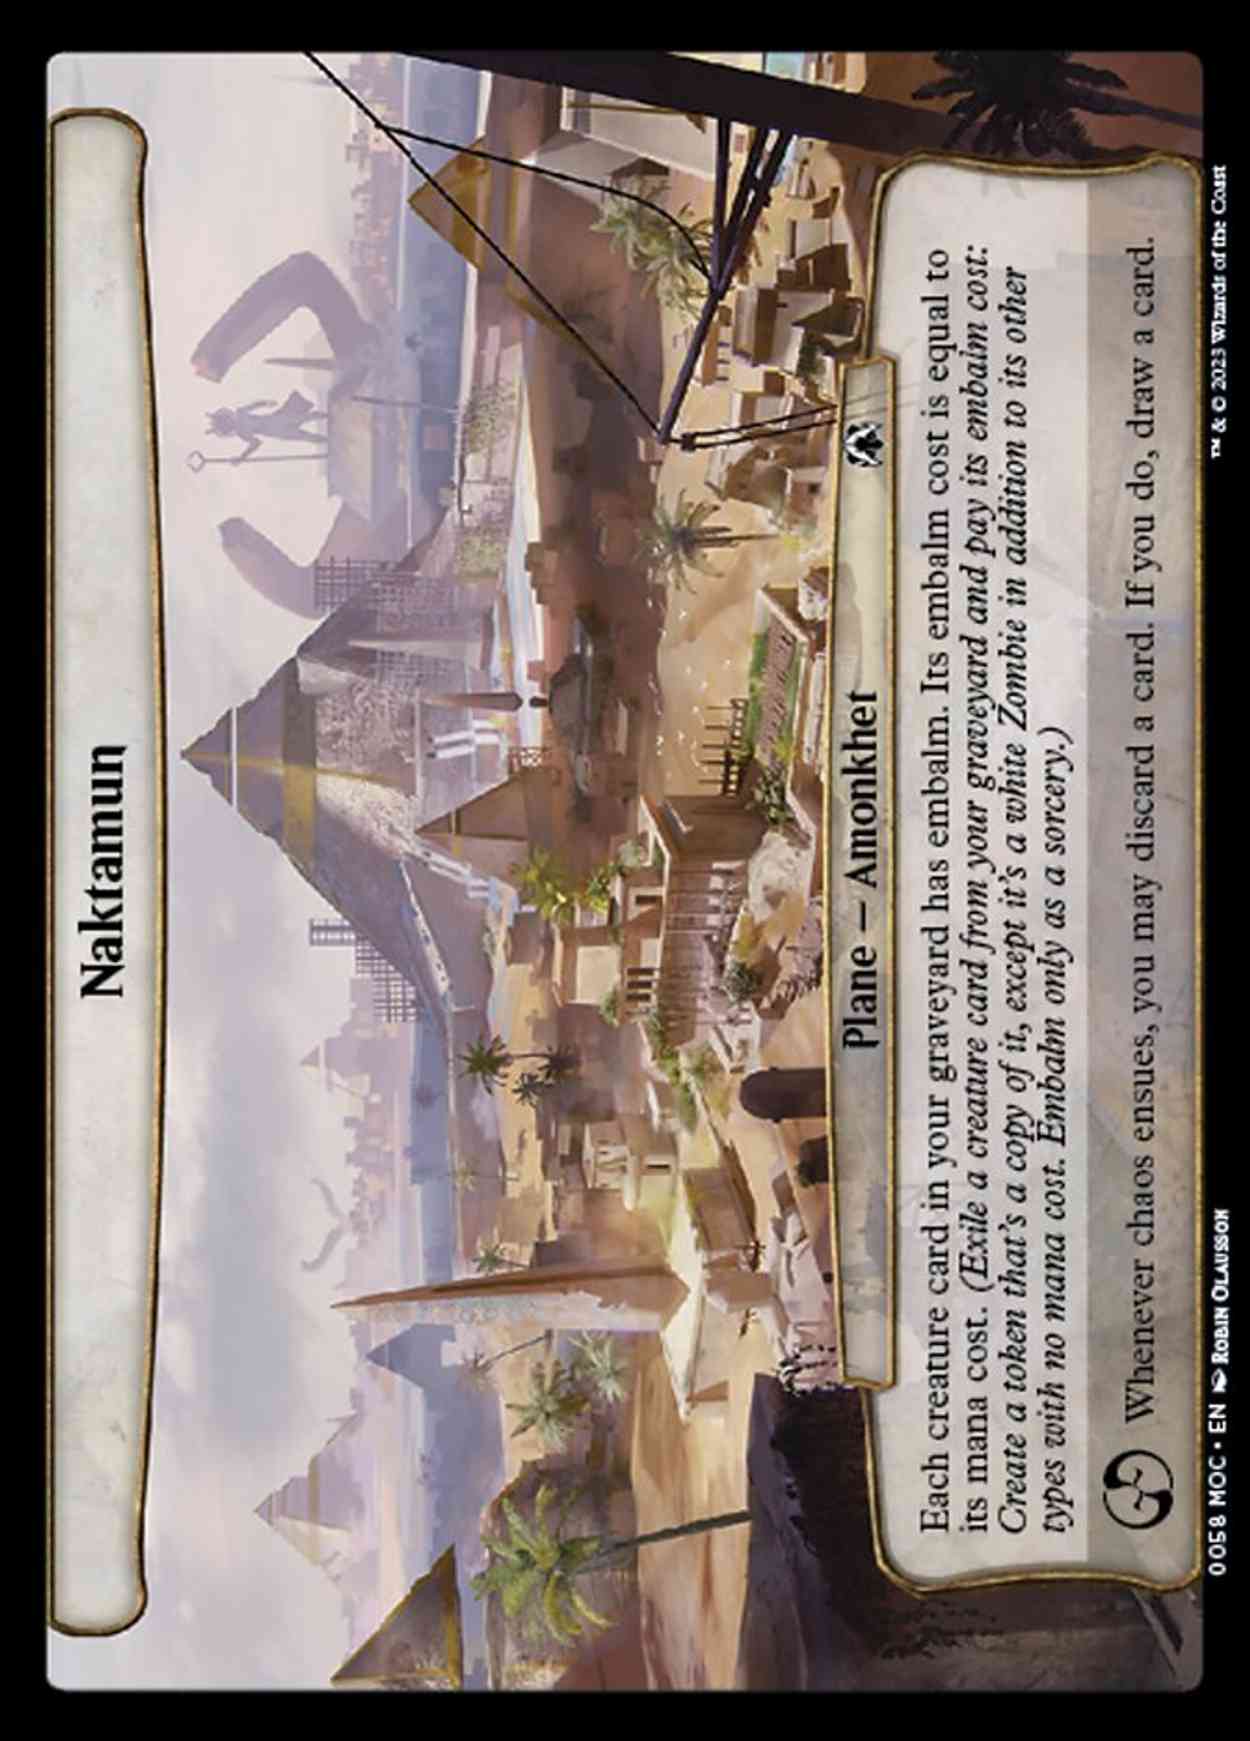 Naktamun magic card front